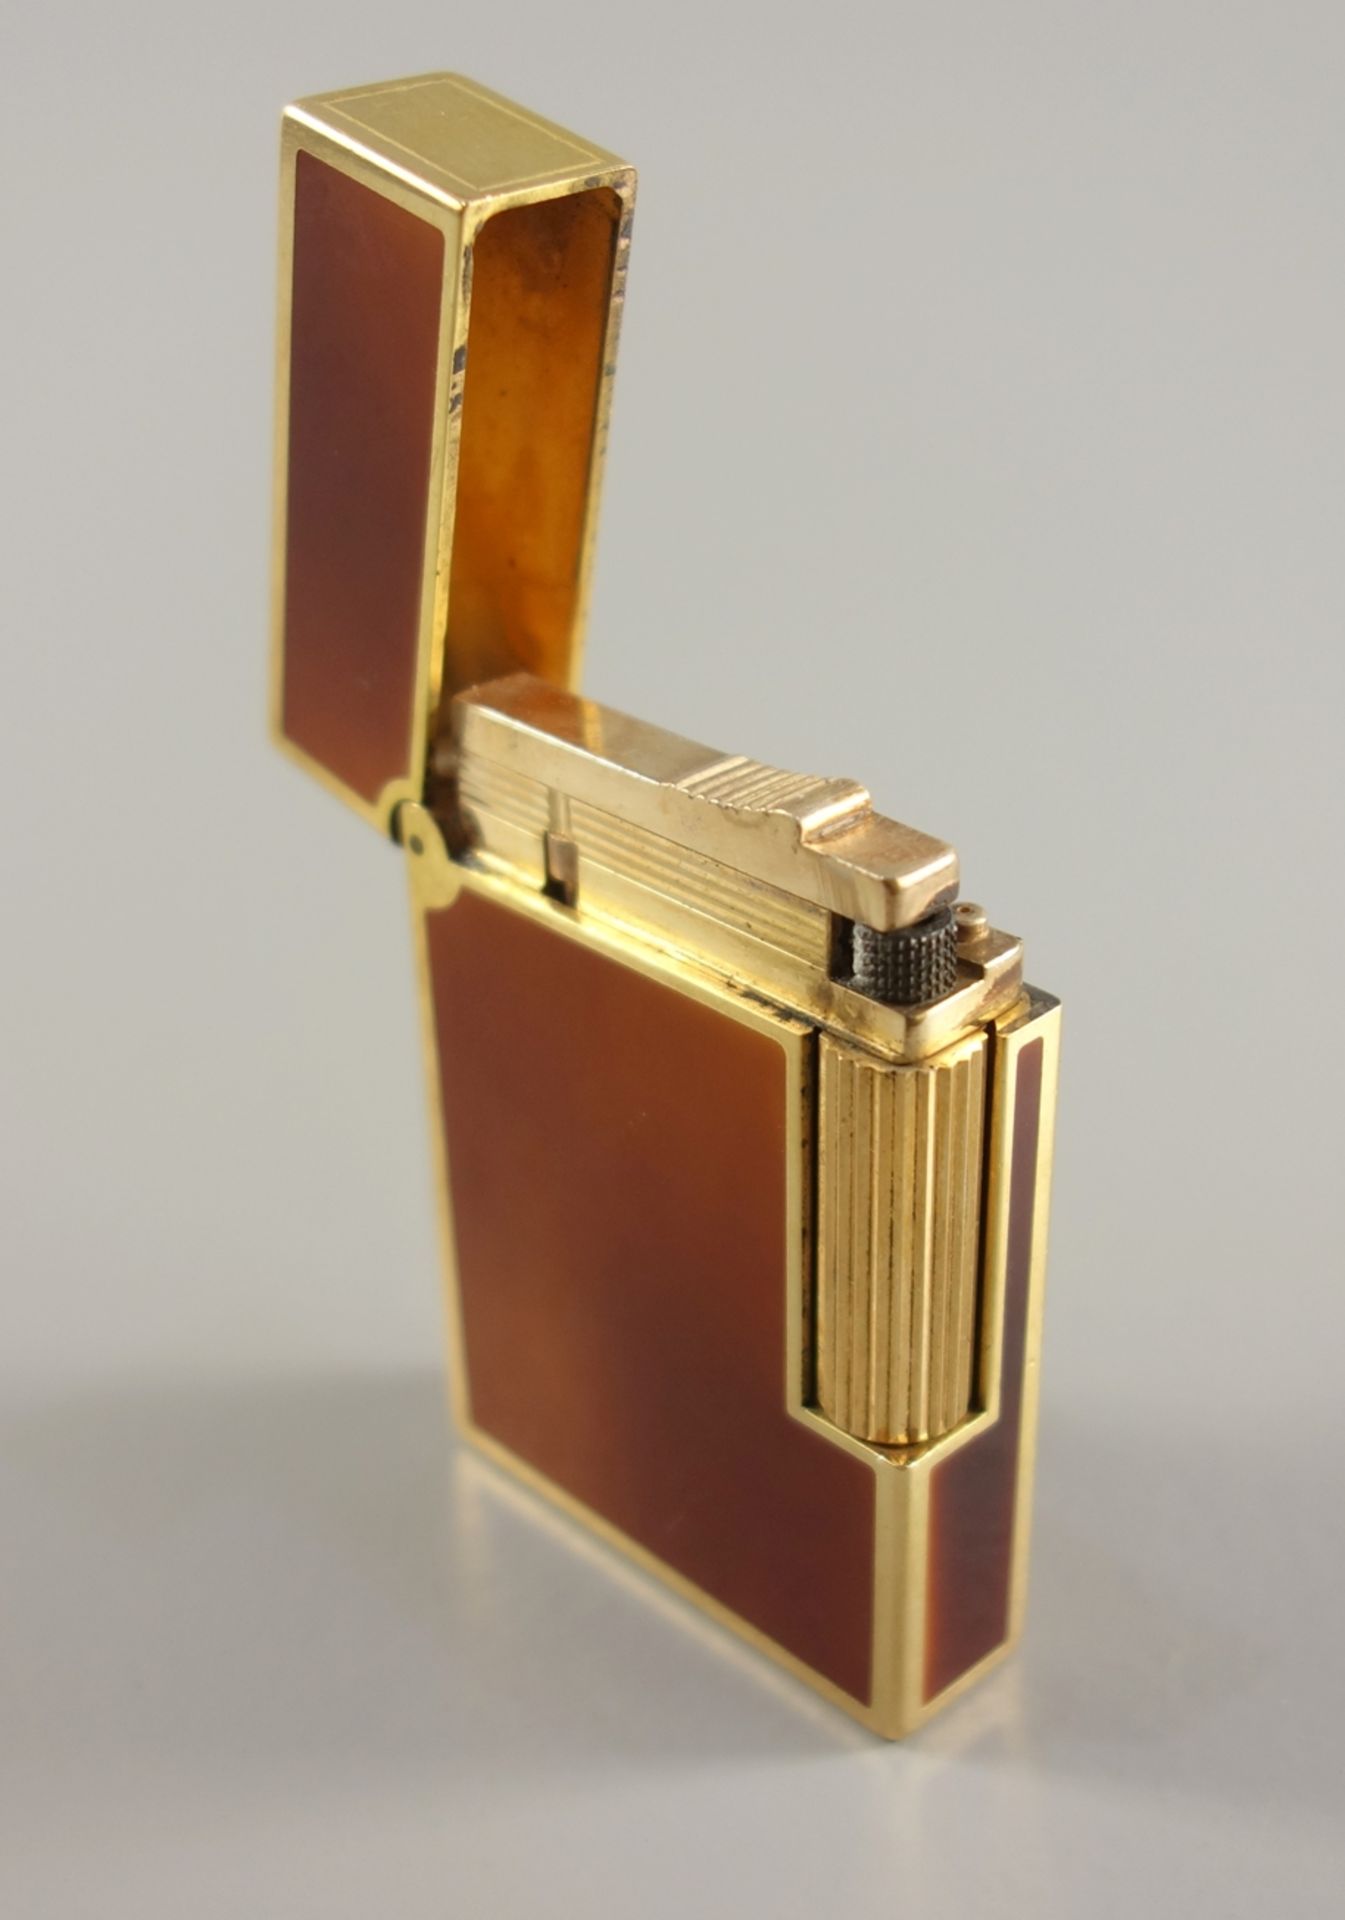 Feuerzeug, S.T. Dupont, Paris, vergoldet, Chinalackdekor, H.55mm, leichte Altersspuren Lighter, S.